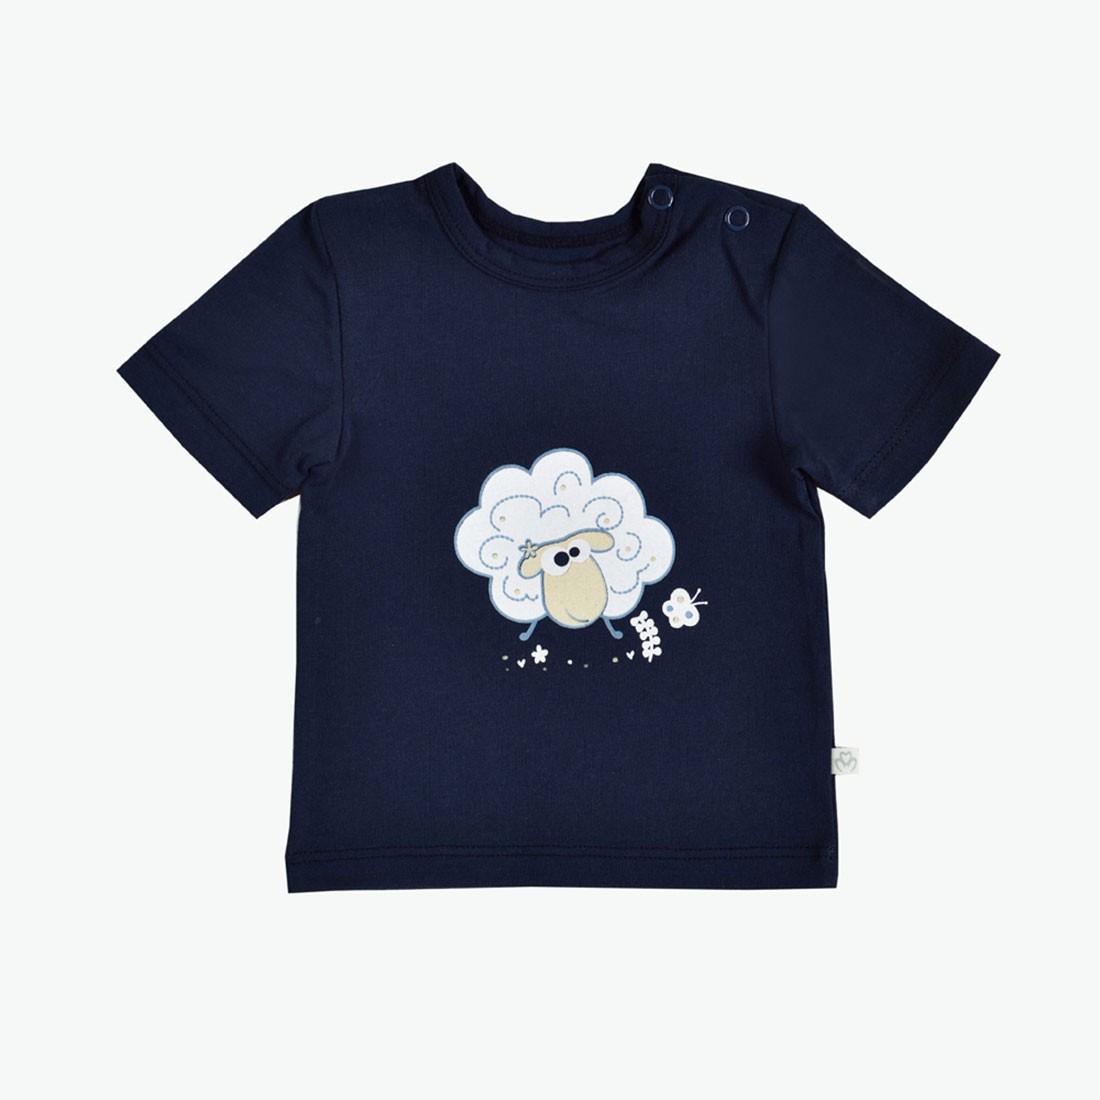 OrganicEra Organic T-shirt, Sheep